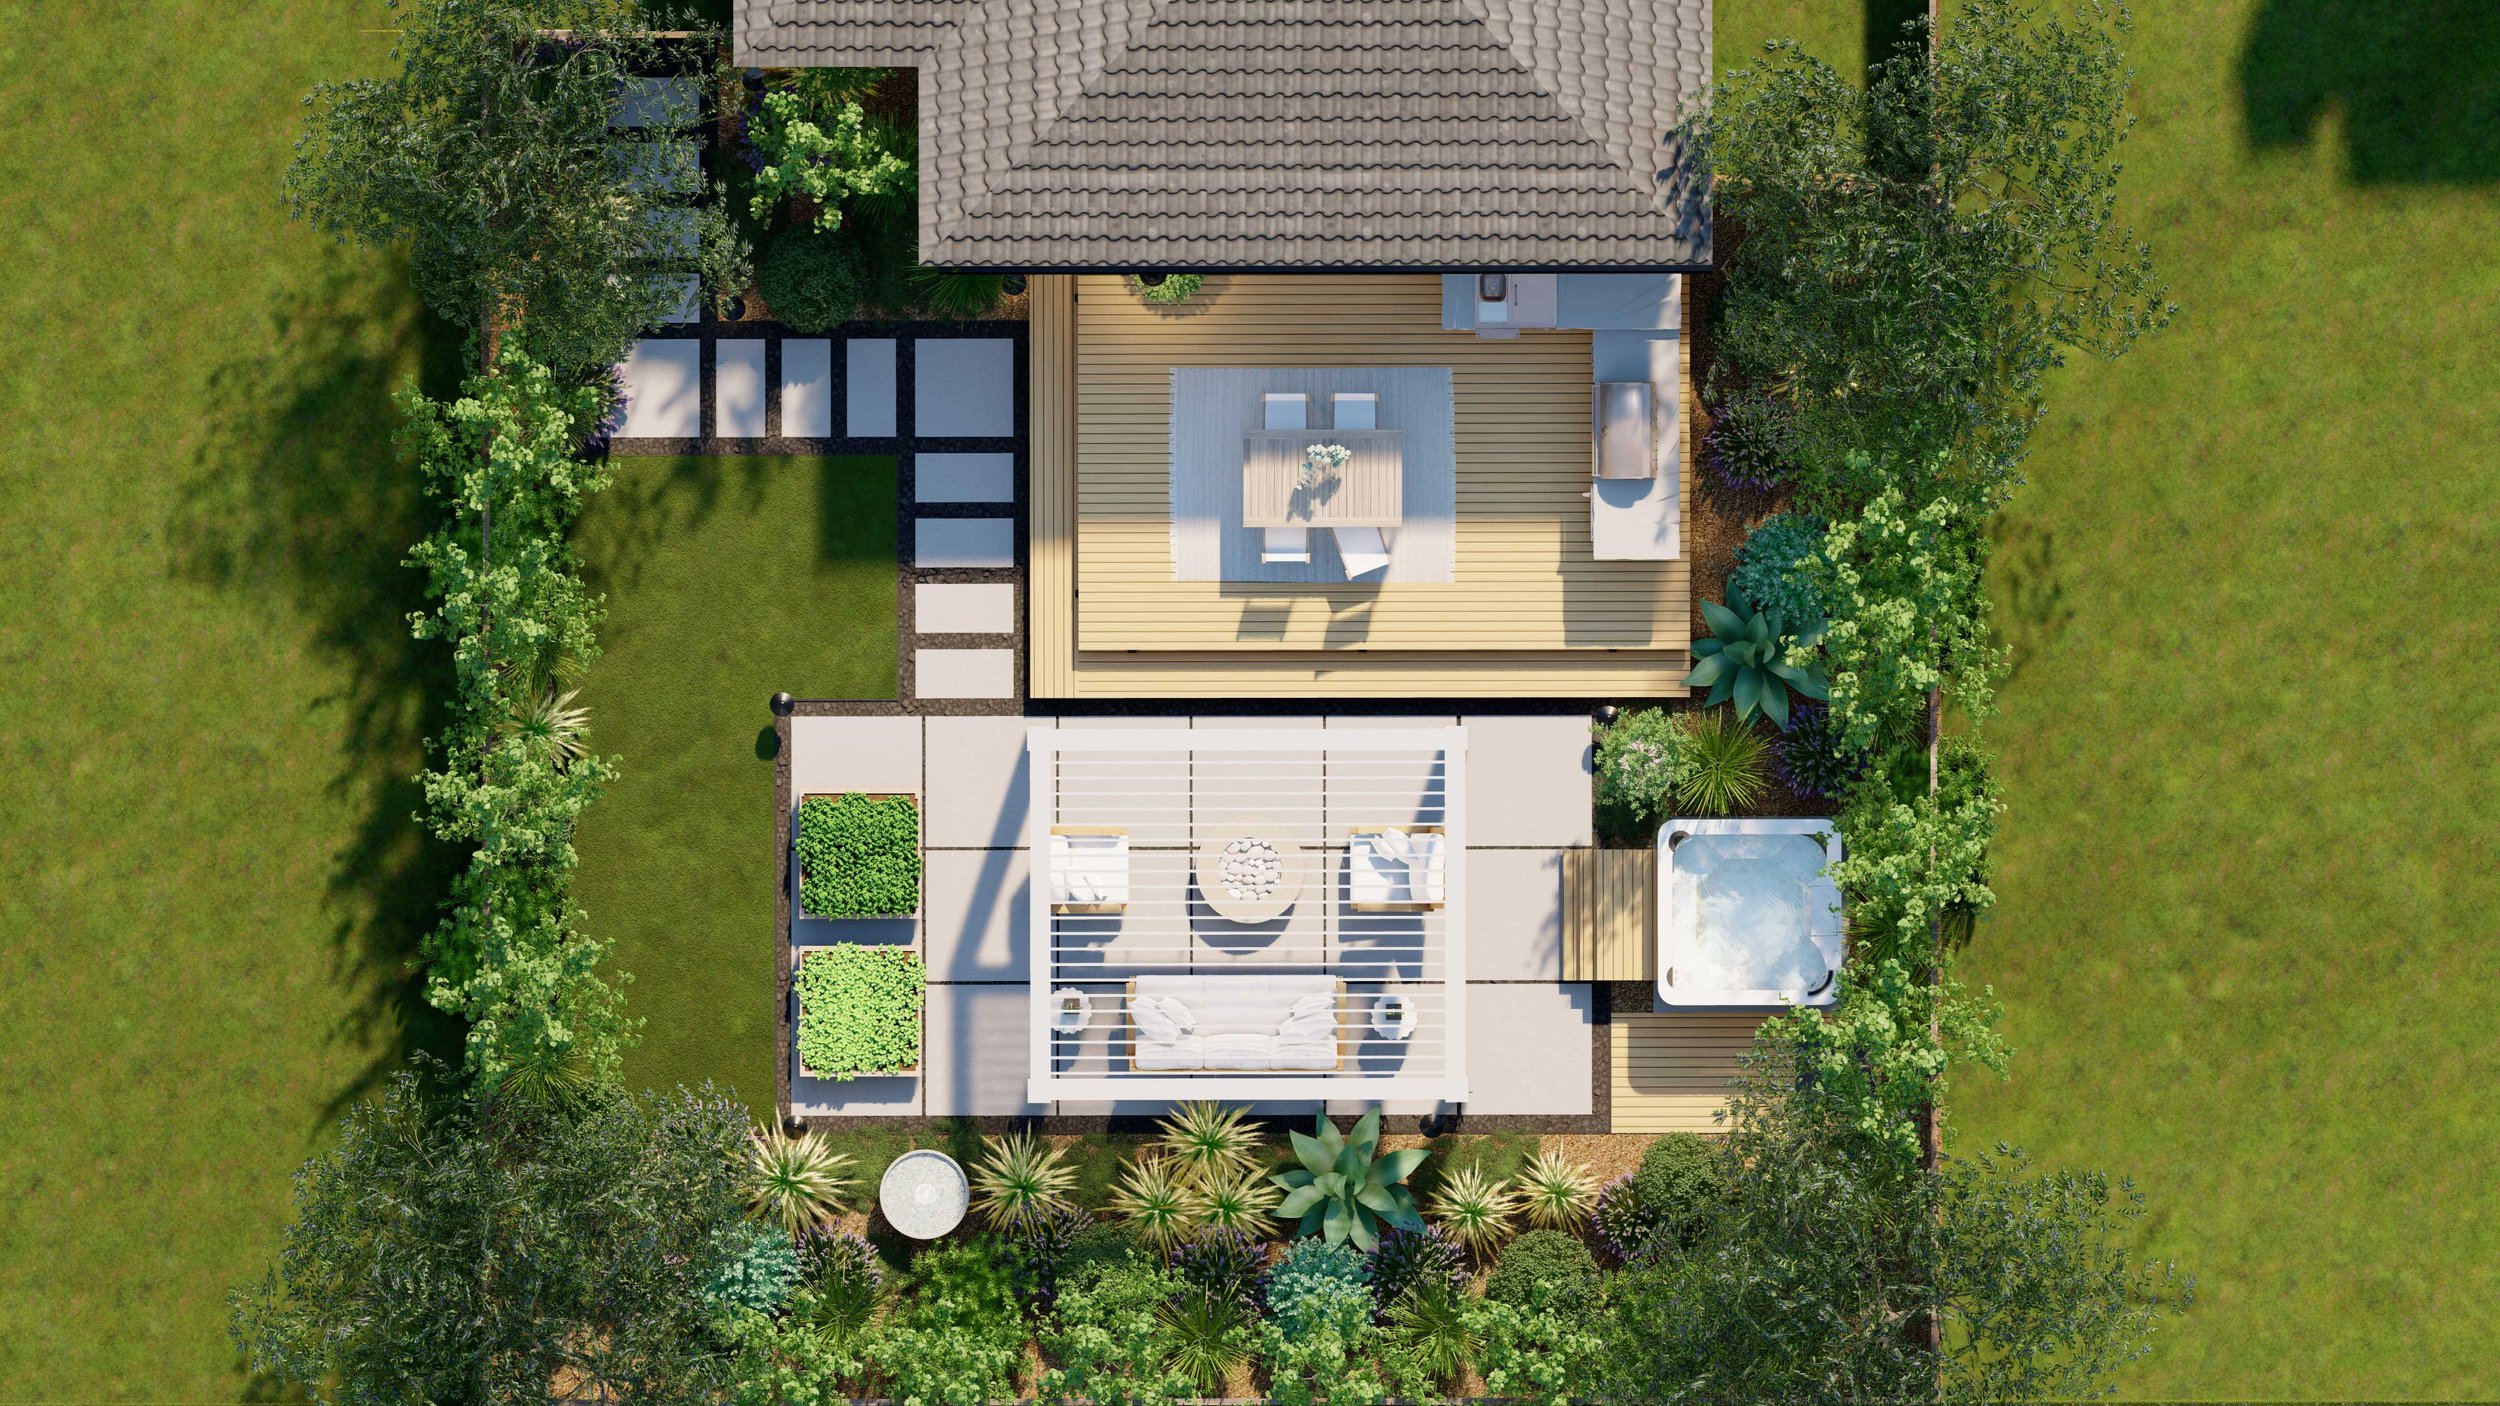 Client’s backyard top view for $125,000 Yardzen transformation